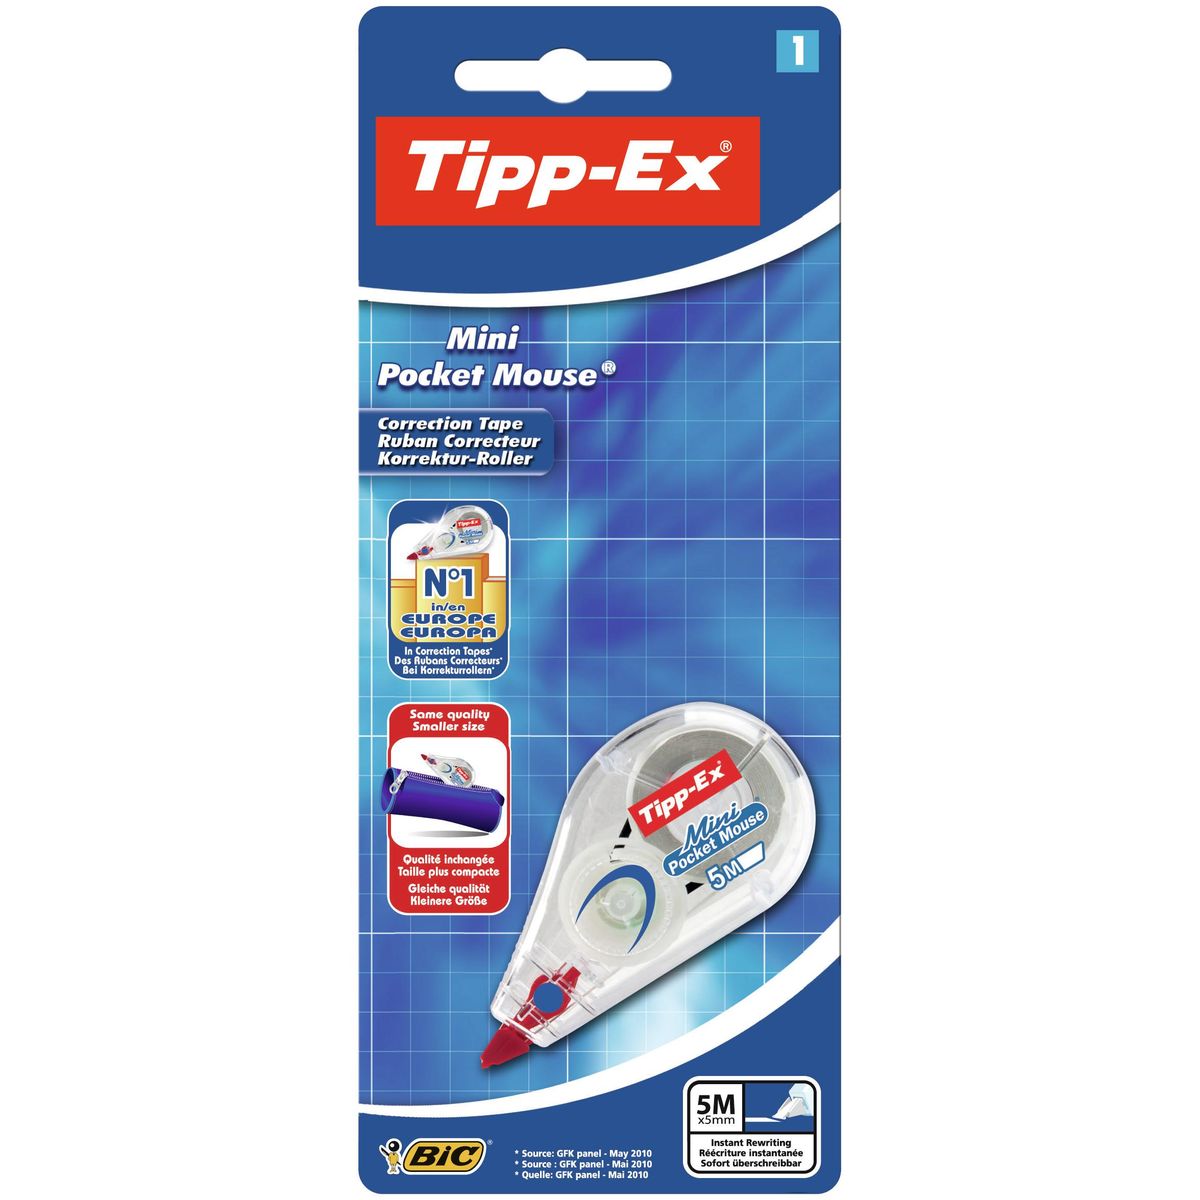 Tipp-ex mini pocket mouse (6mm)